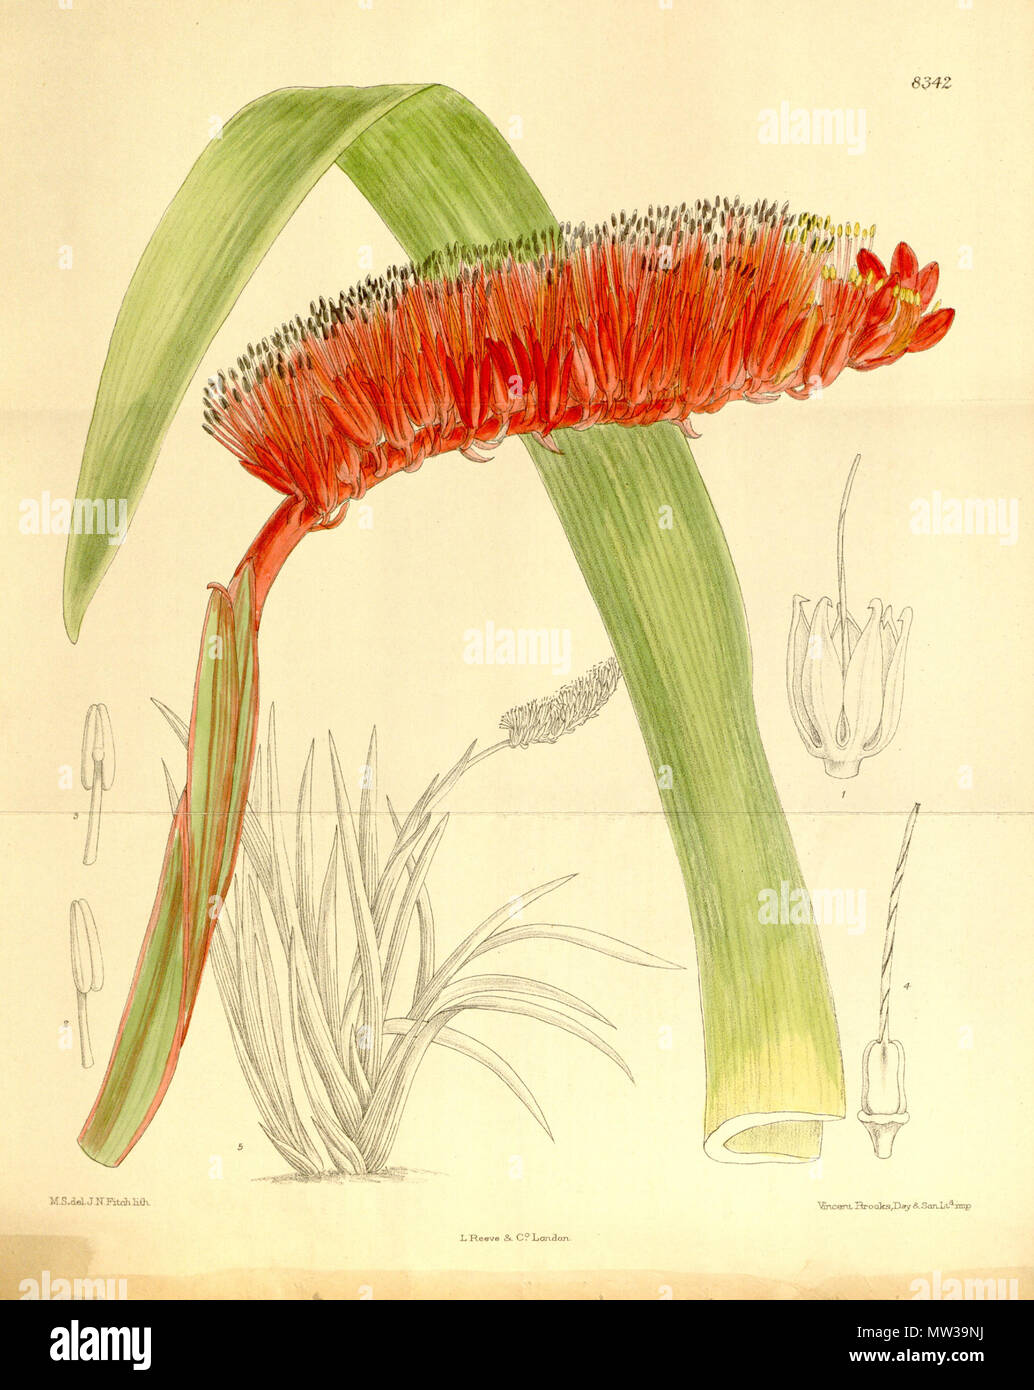 . Xeronema moorii, Xeronemataceae . 1910. M.S. del., J.N.Fitch lith. 655 Xeronema moorii 136-8342 Stock Photo